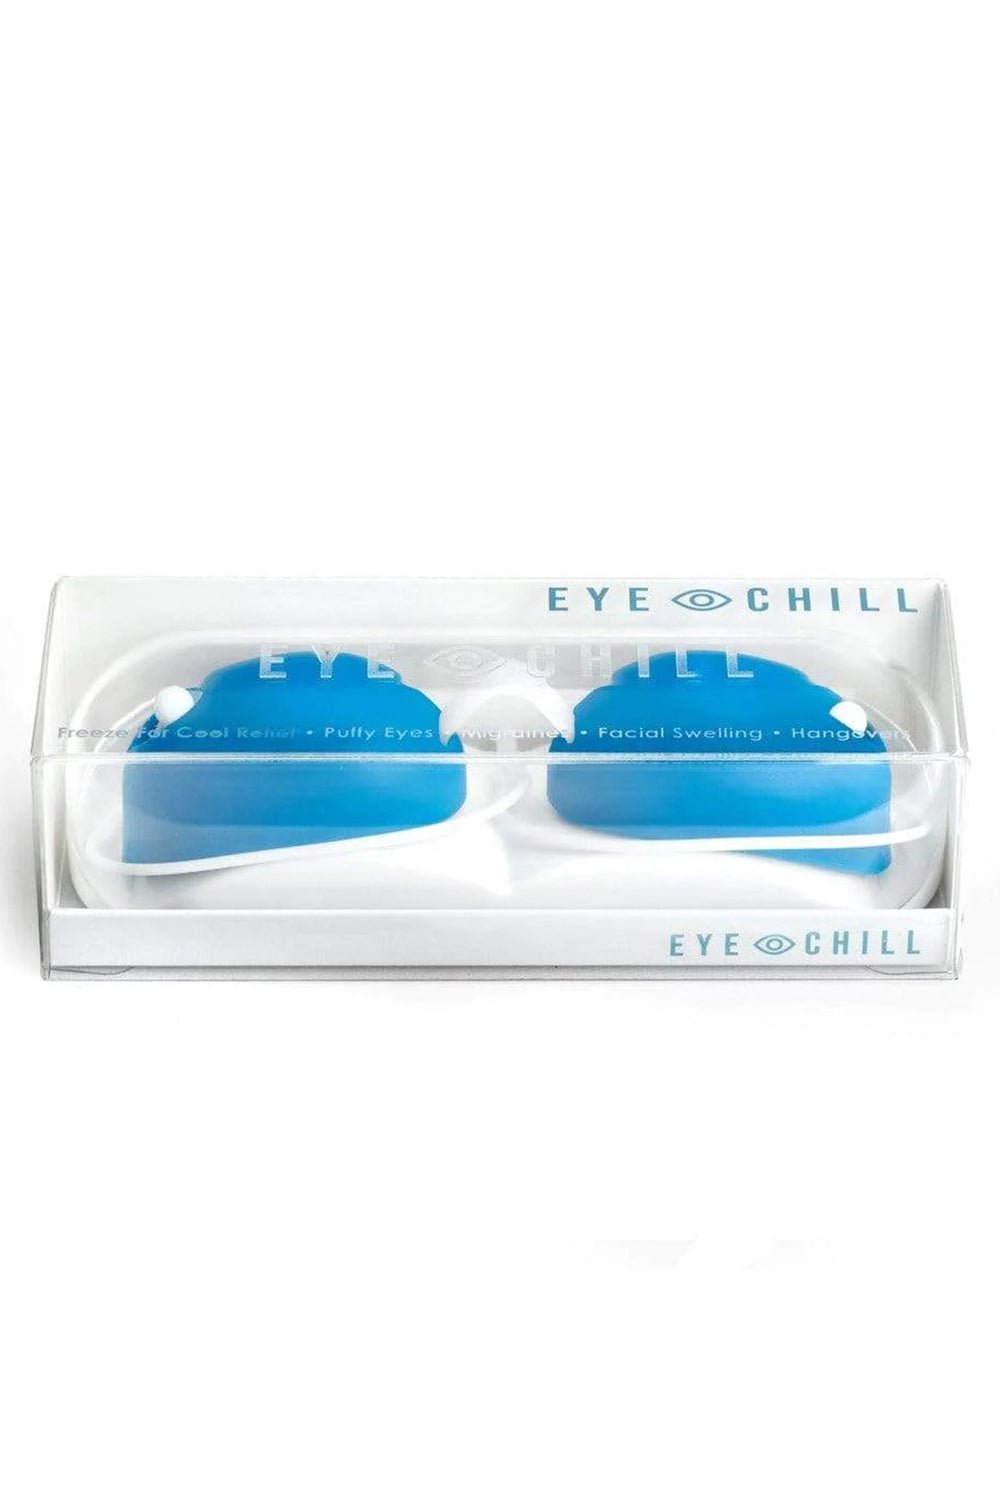 EYECHILL, LLC-The Eye Chill-BLUE